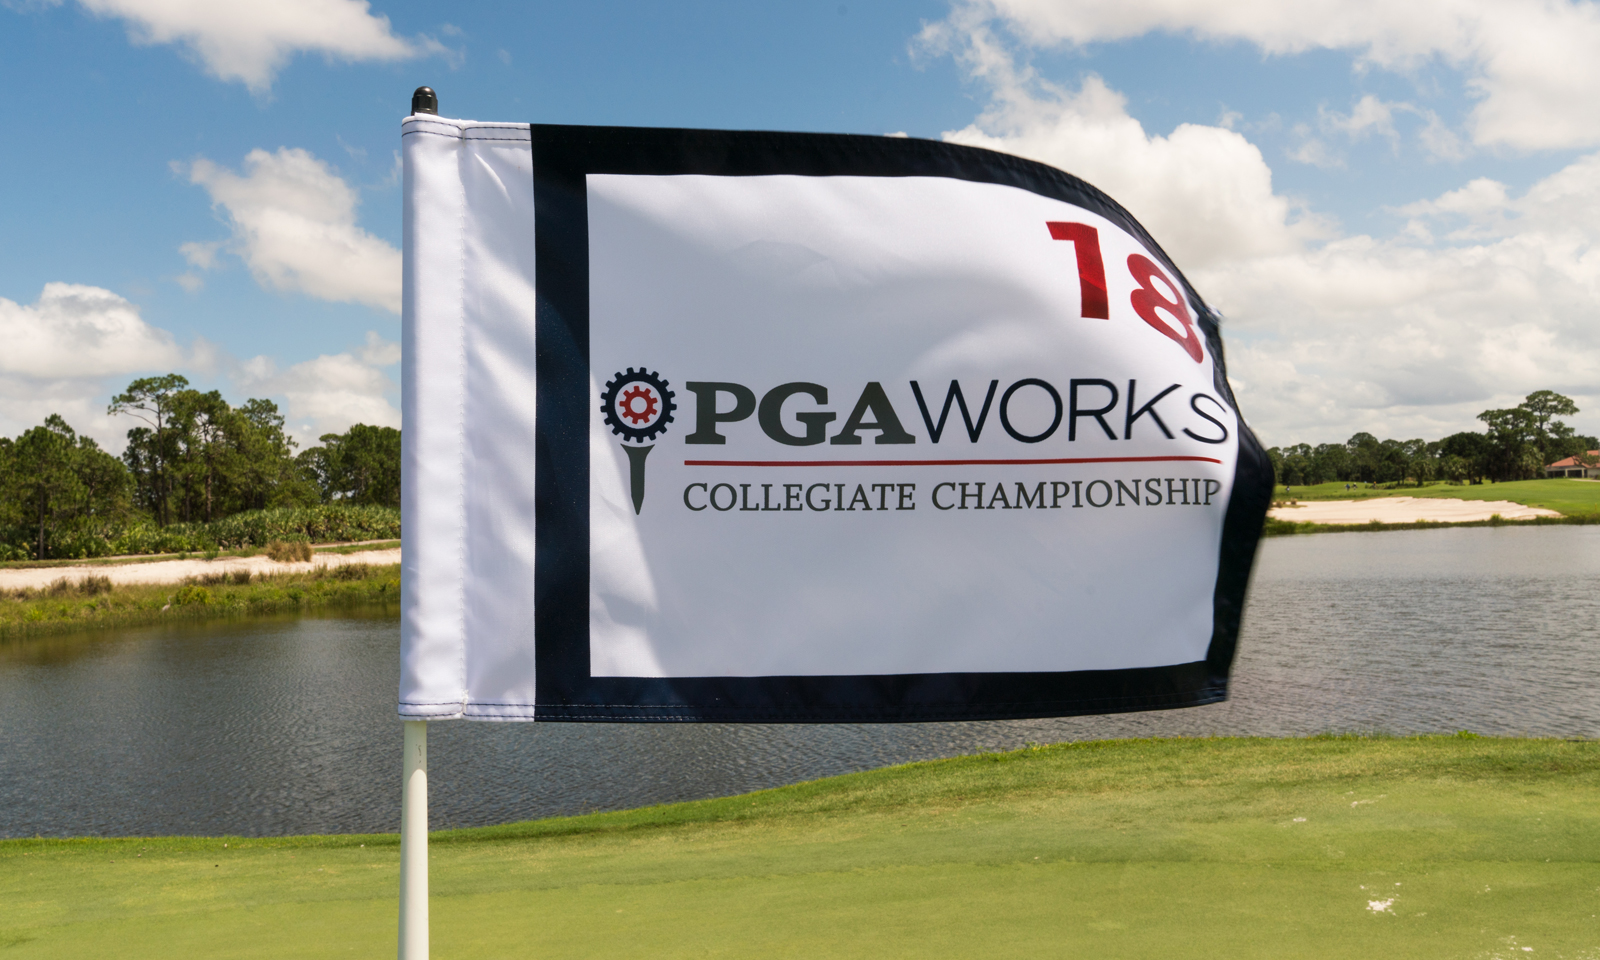 The PGA WORKS Collegiate Championship flag